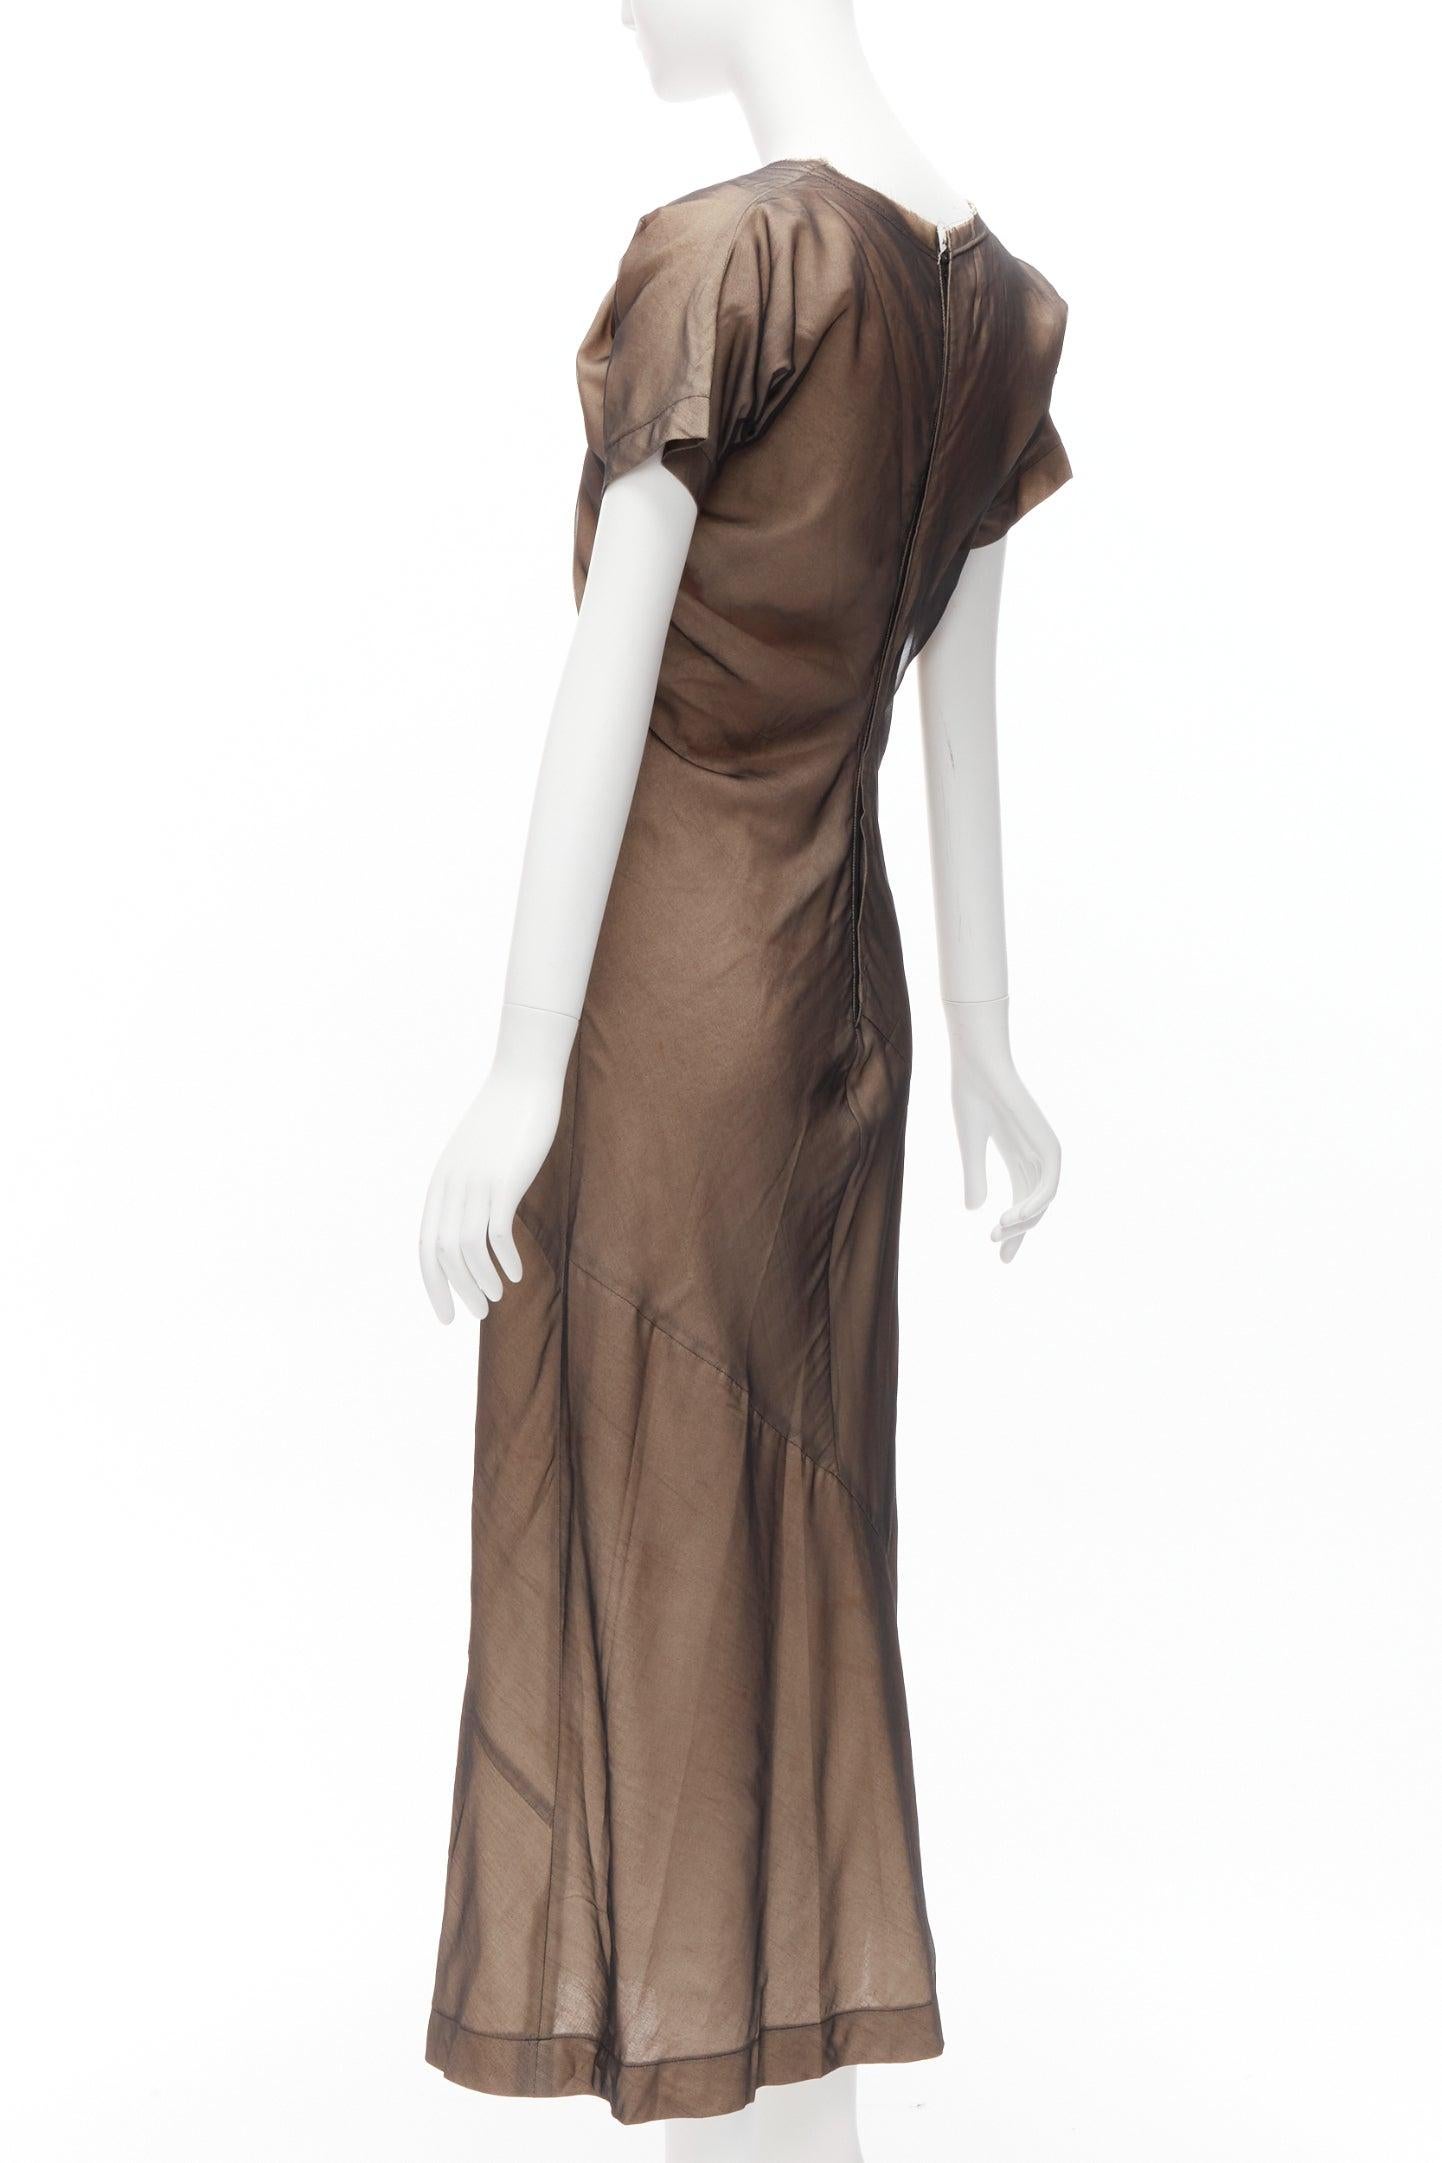 COMME DES GARCONS Vintage nude sheer overlay A-line bias dress S Cindy Sherman For Sale 2